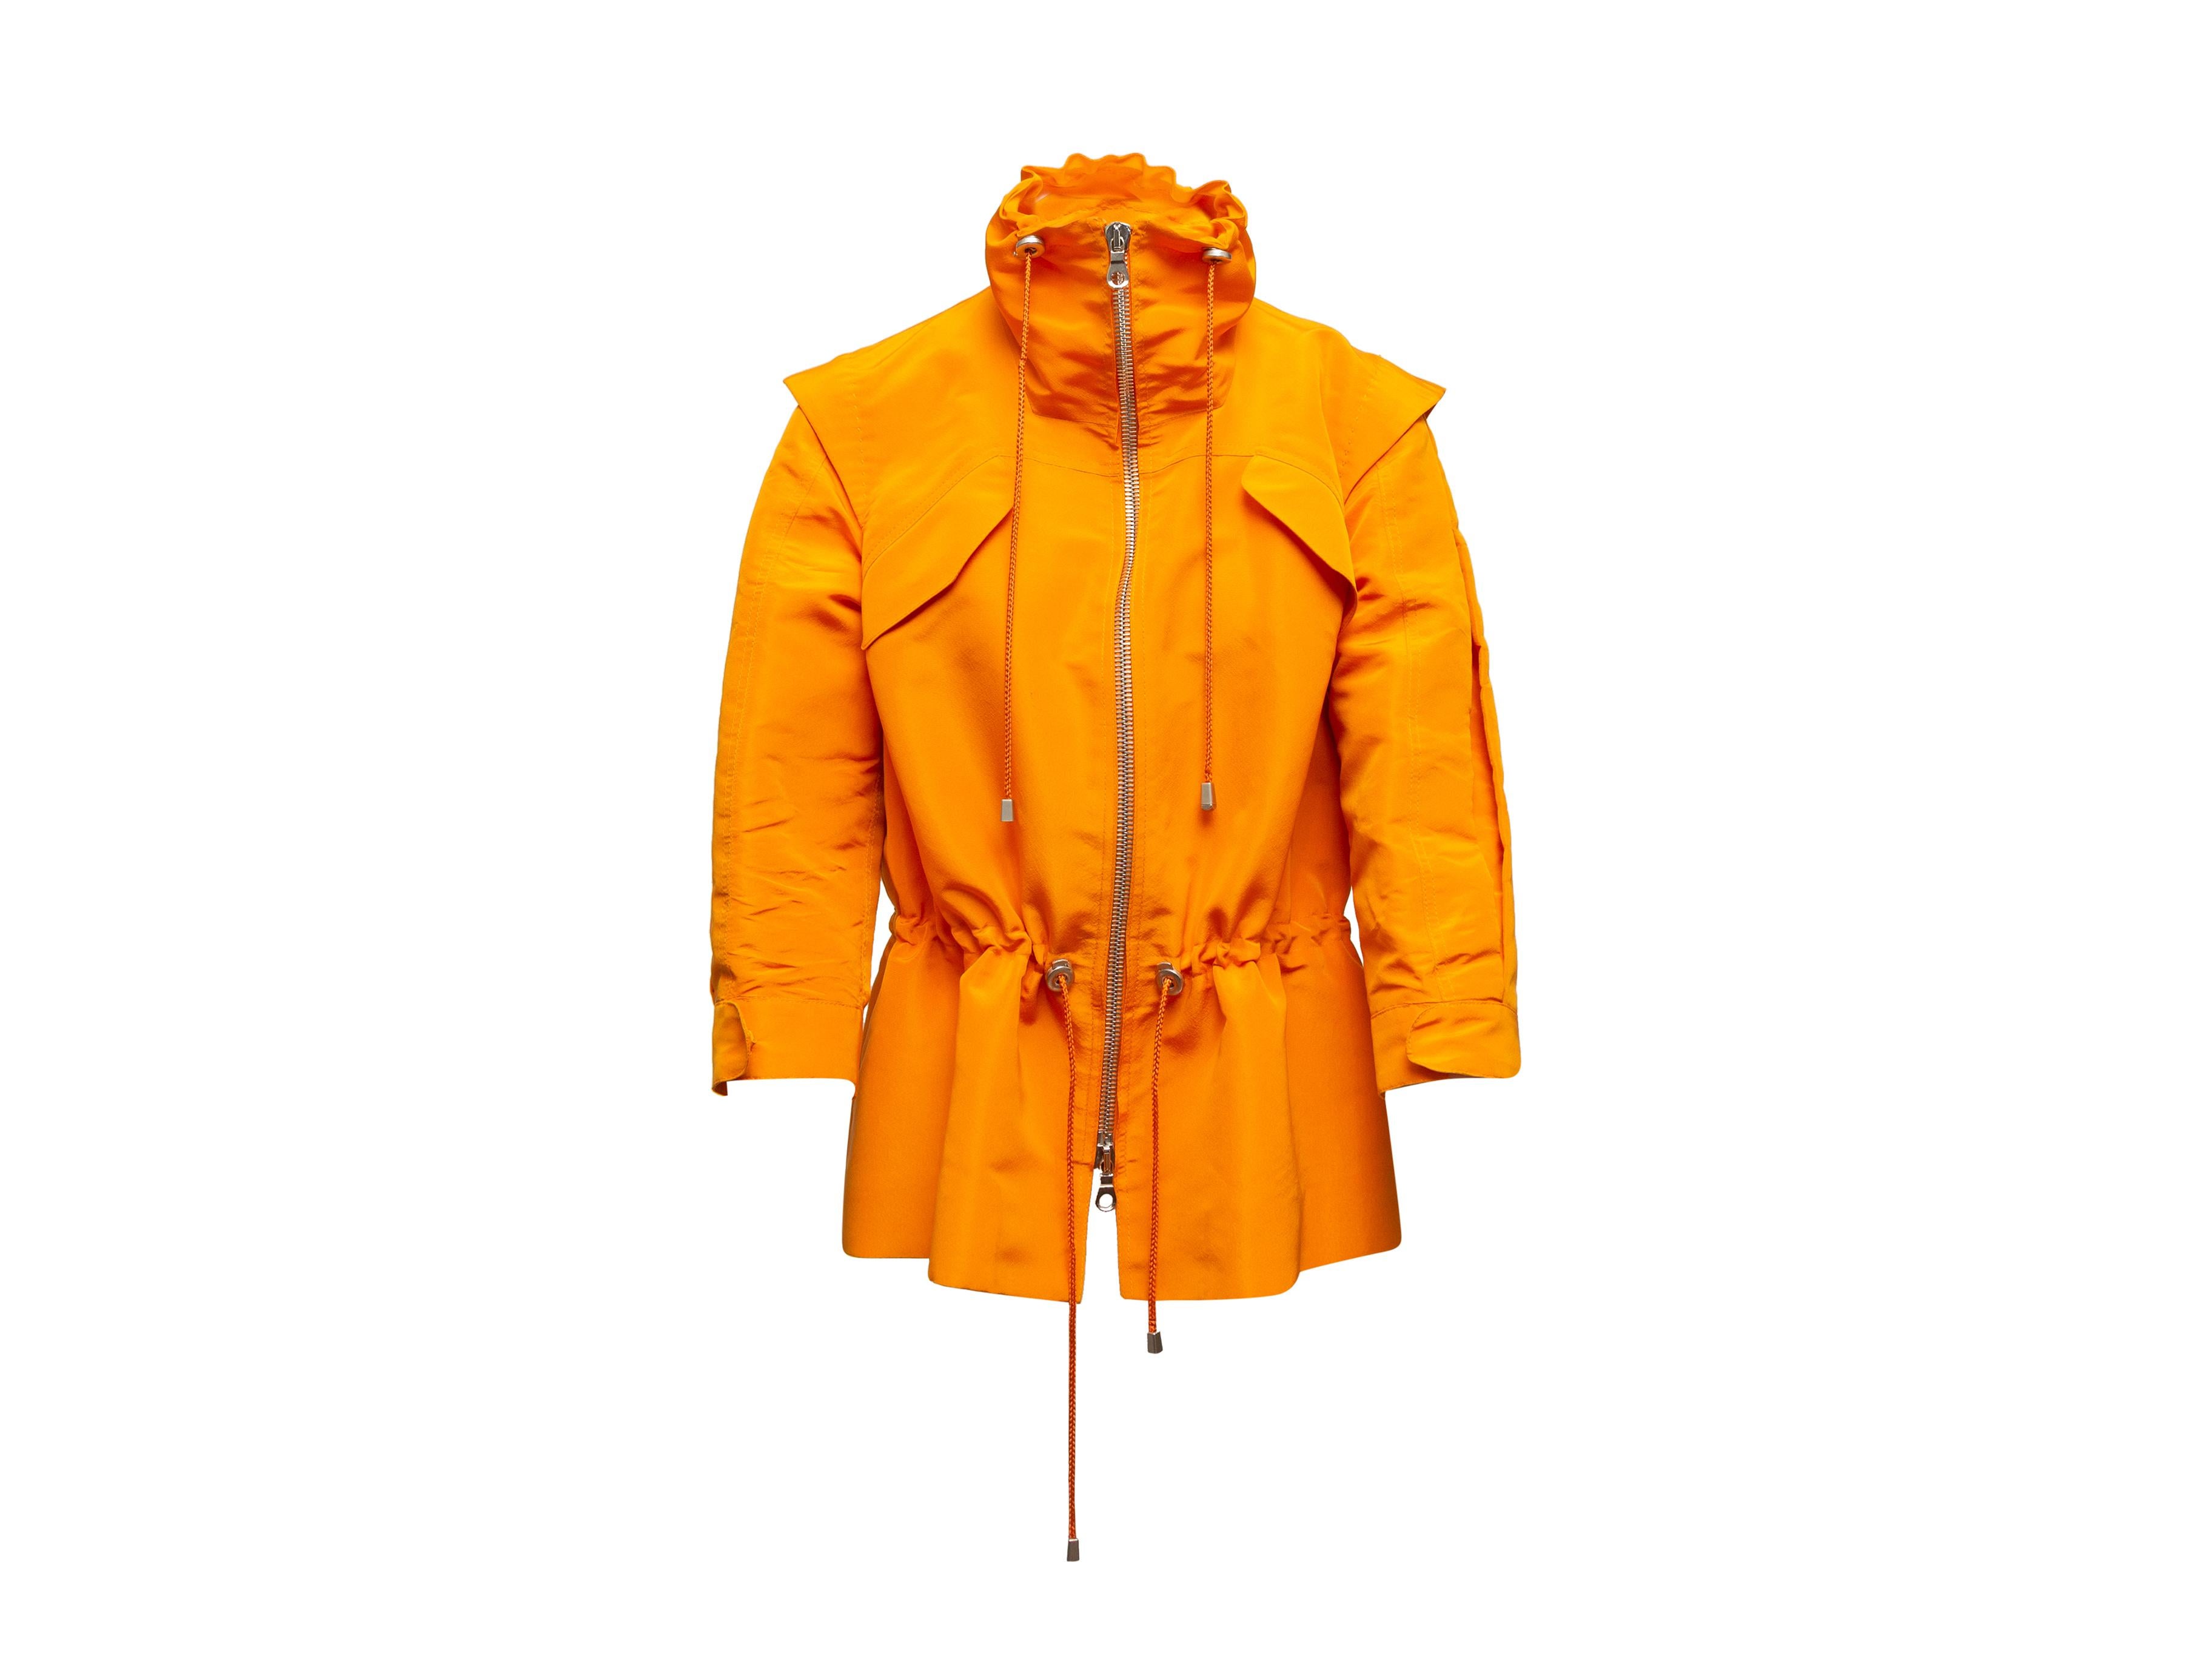 Product details: Orange silk jacket by Oscar de la Renta. High collar featuring drawstring. Drawstring at waist. Zip closure at center front. 40